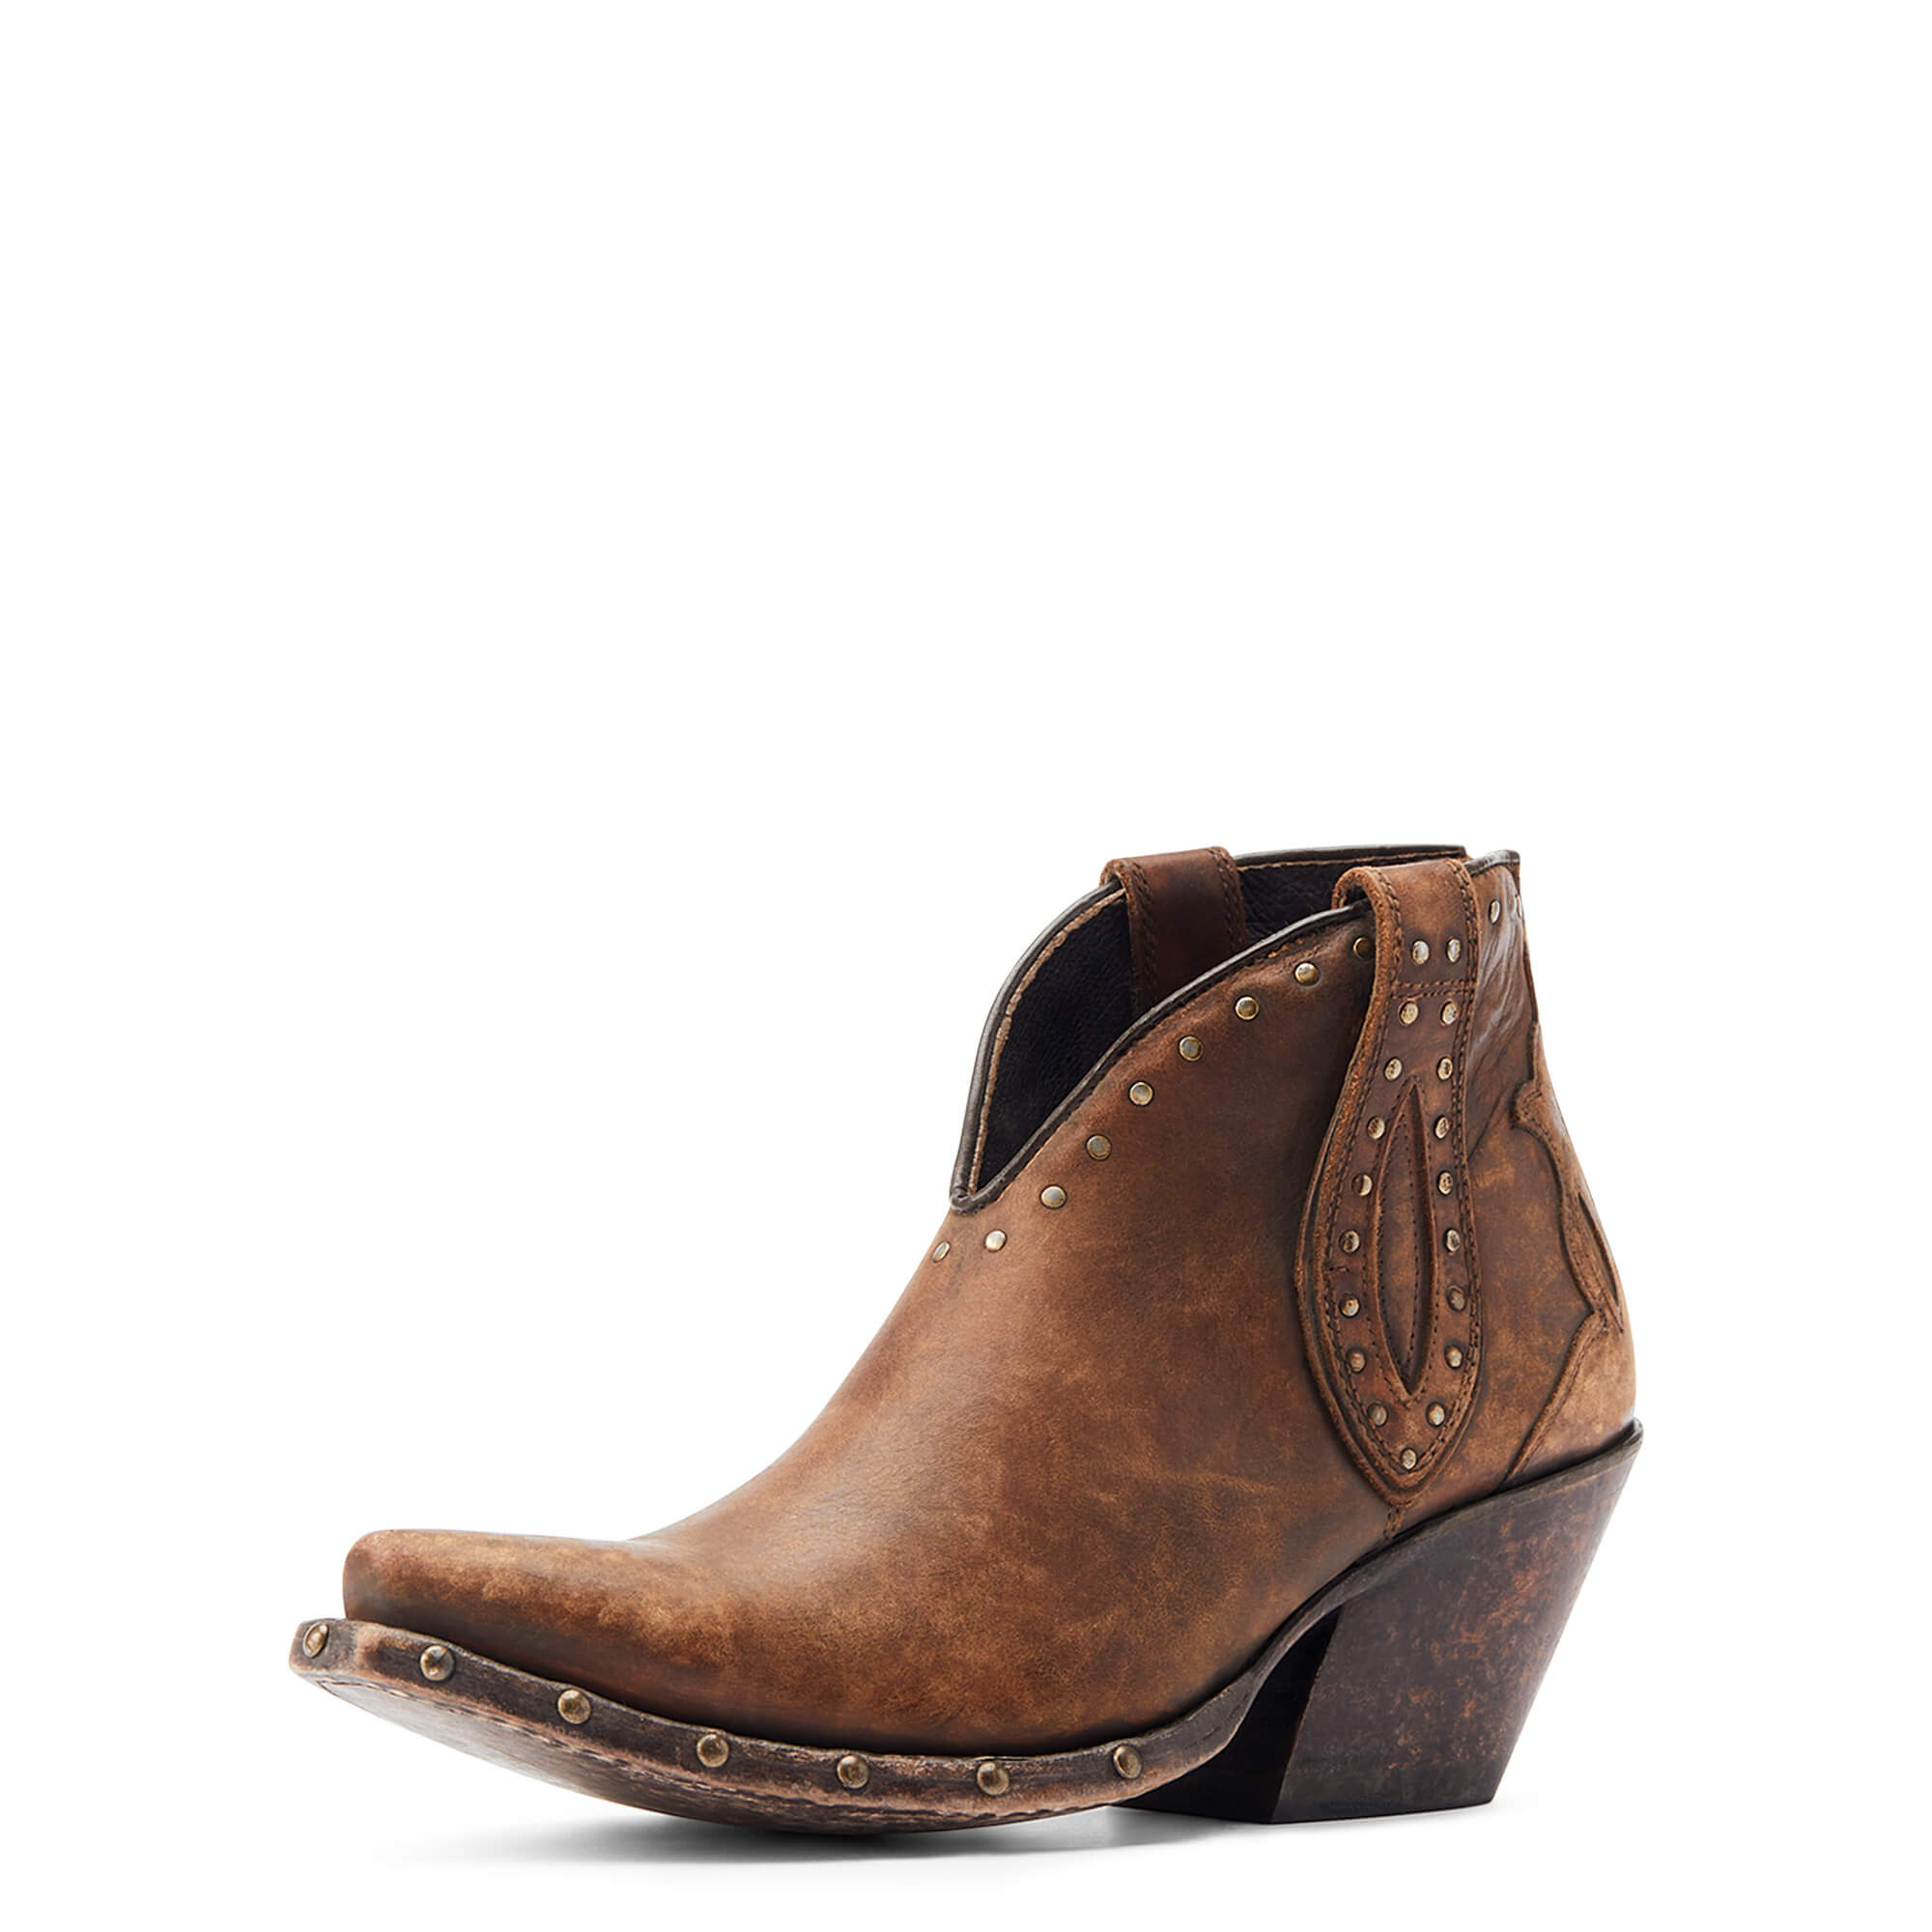 Ariat / Women's Greeley Western Boot